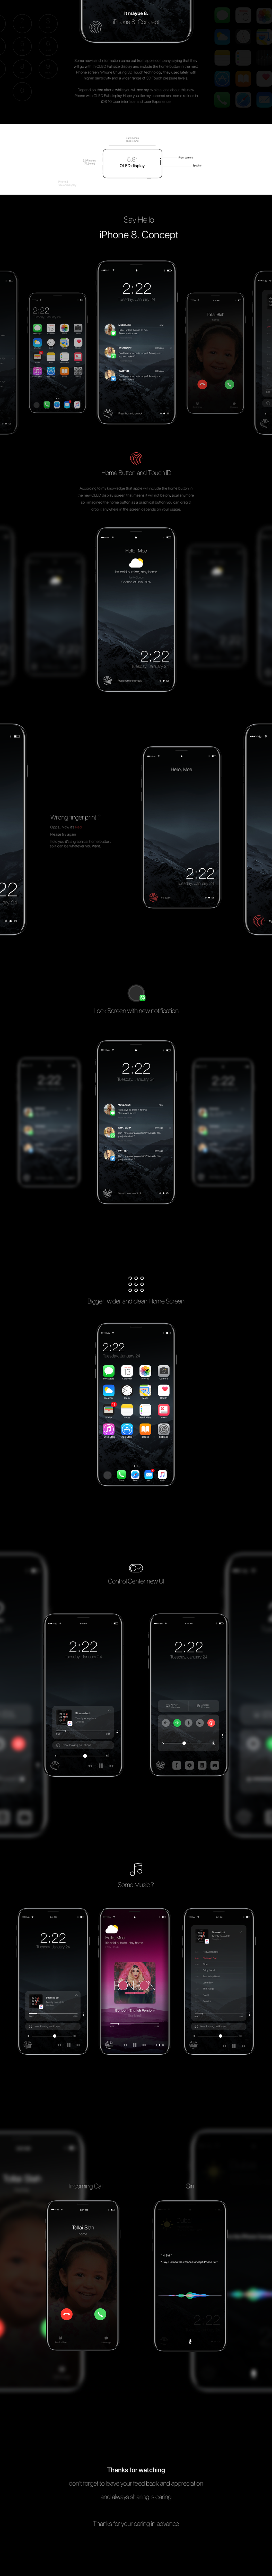 iphone-8-koncept-mörkt-läge